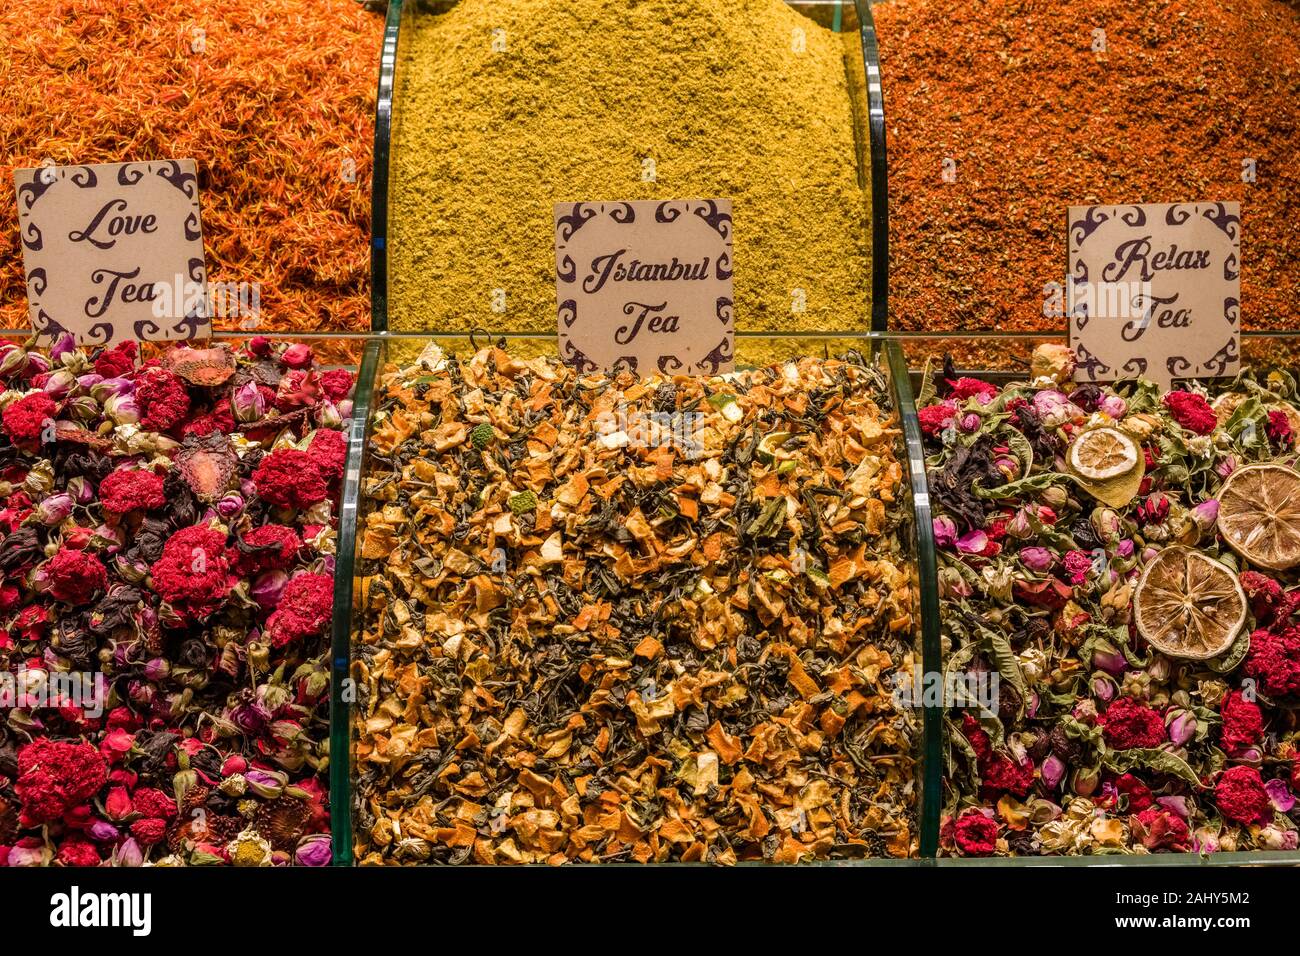 Big variety of different teas and spices are offered for sale inside the Spice Bazaar, Mısır Çarşısı, also known as Egyptian Bazaar Stock Photo